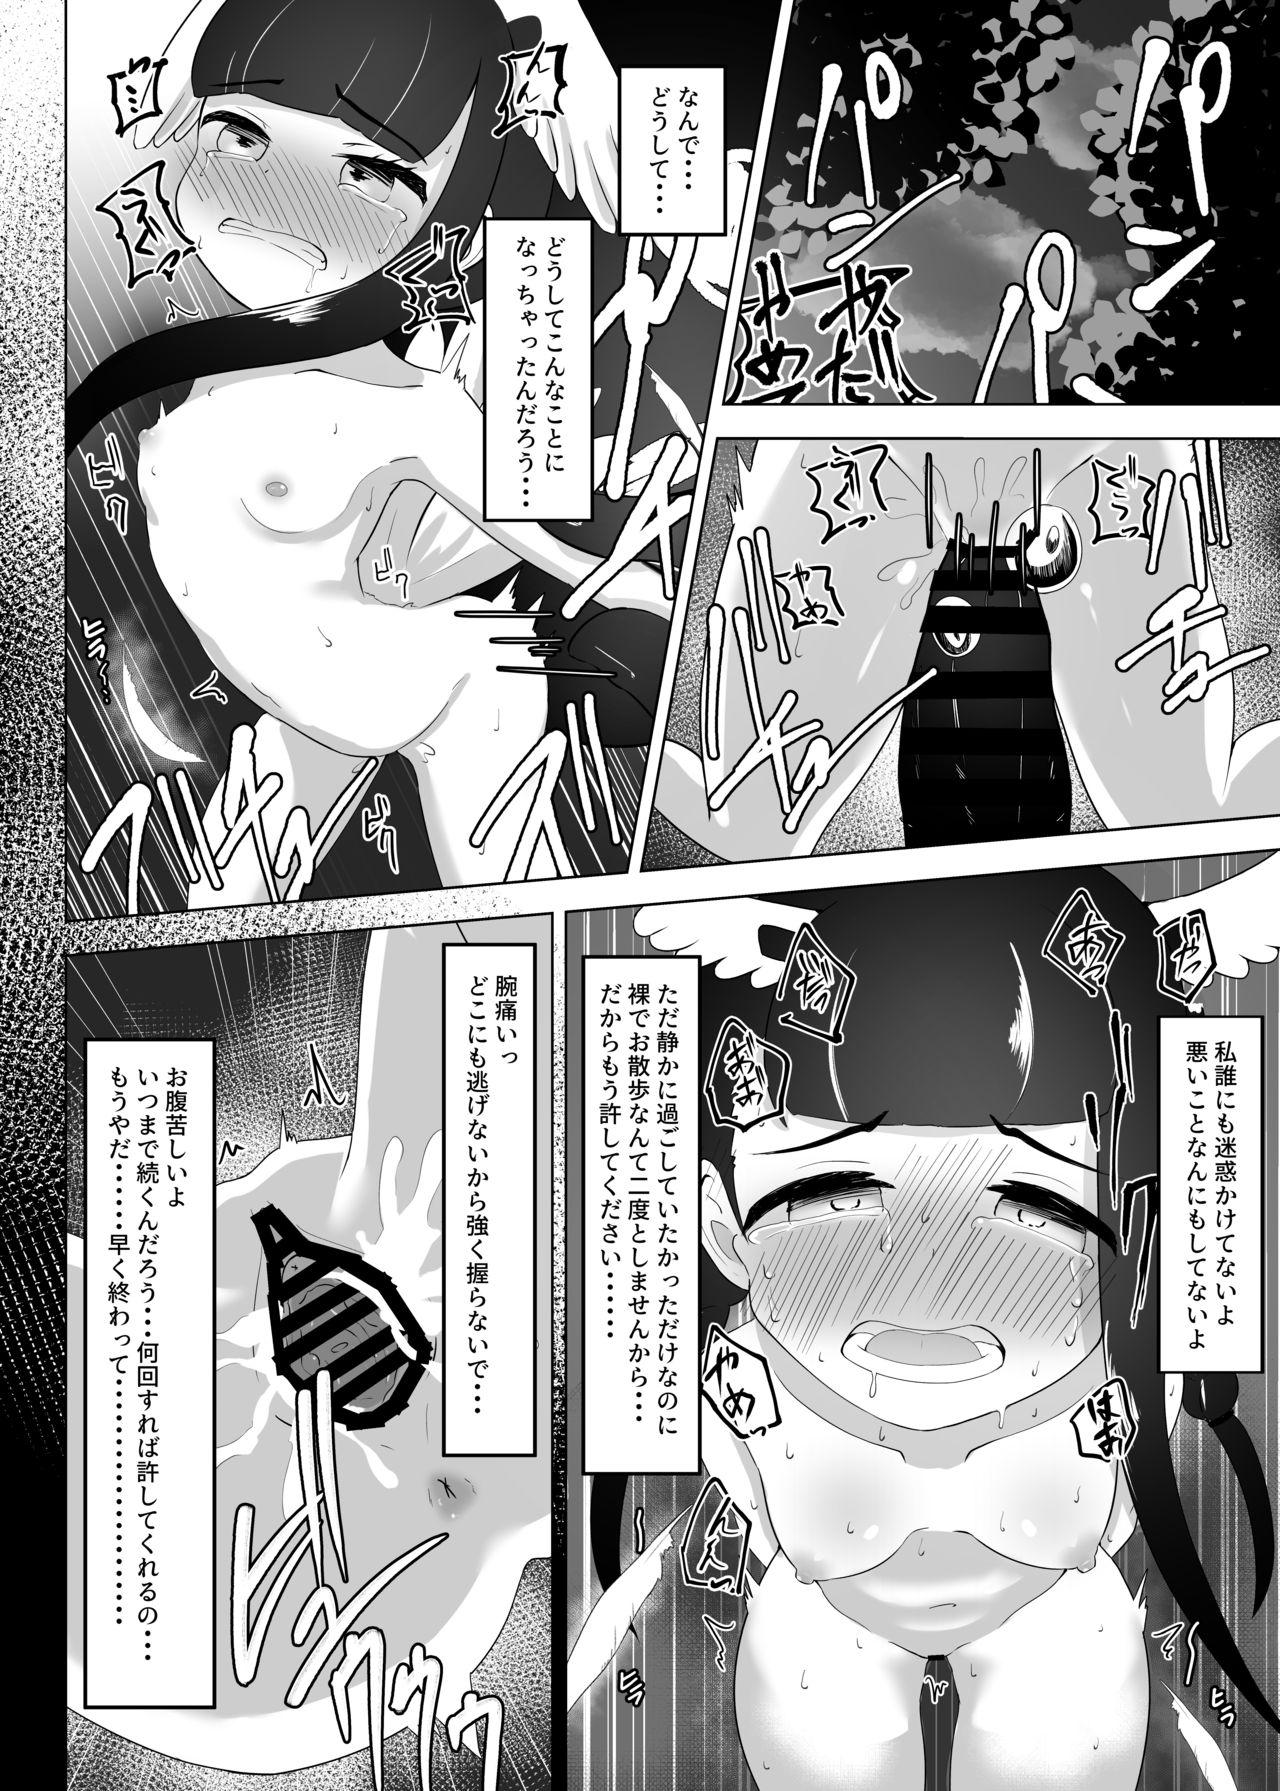 Stockings 露出徘徊してただけなのに - Kemono friends Sologirl - Page 9